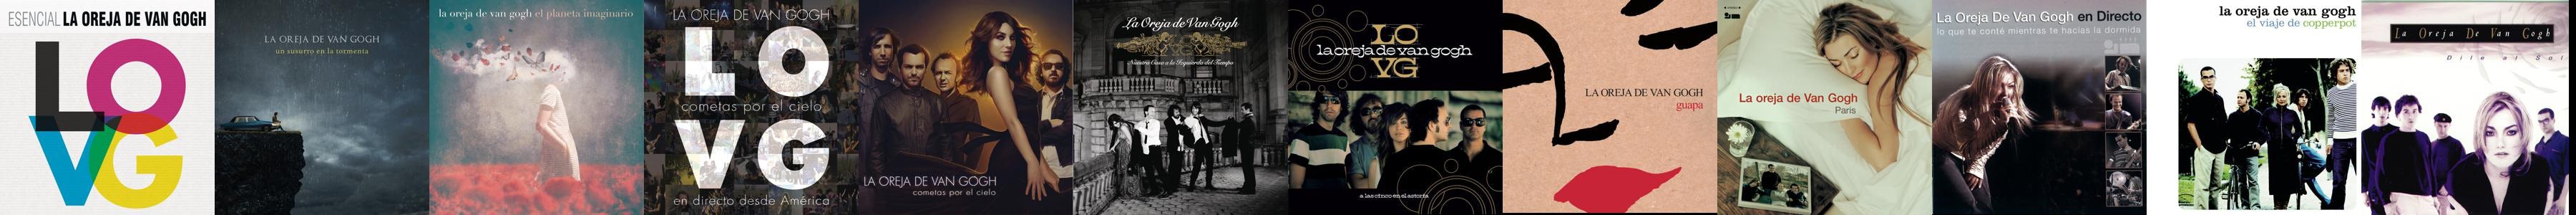 la oreja de van gogh - un susurro en la torment - Buy LP vinyl records of  Spanish Bands since the 90s to present on todocoleccion